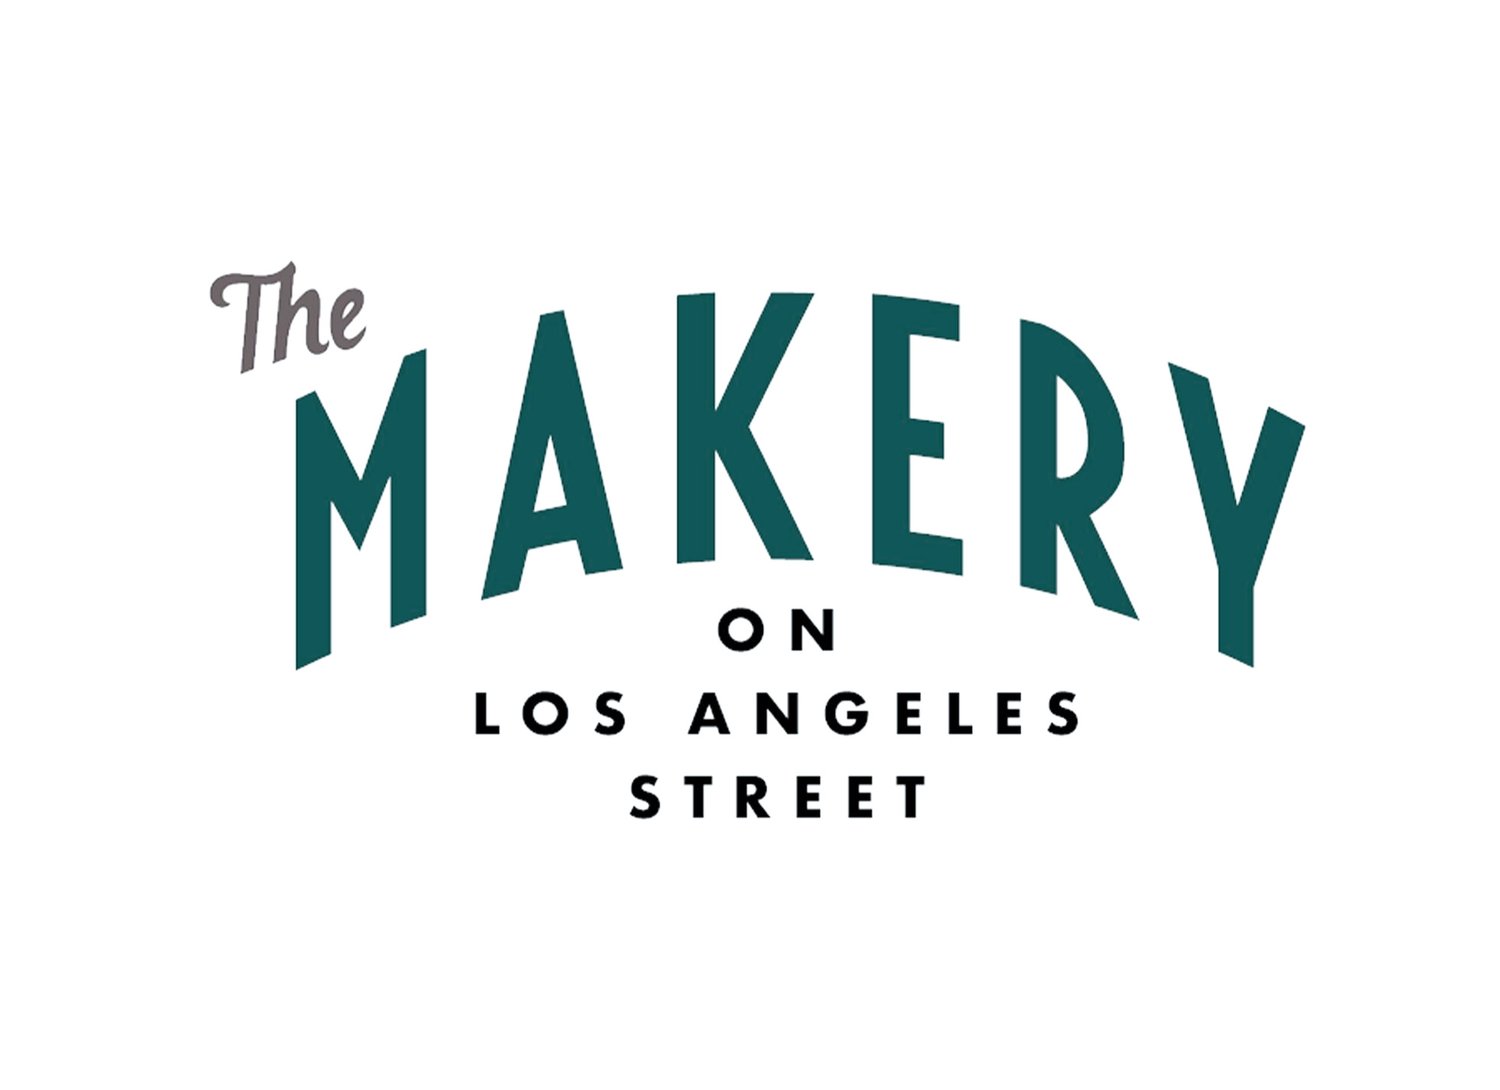 The Los Angeles Makery on Los Angeles Street